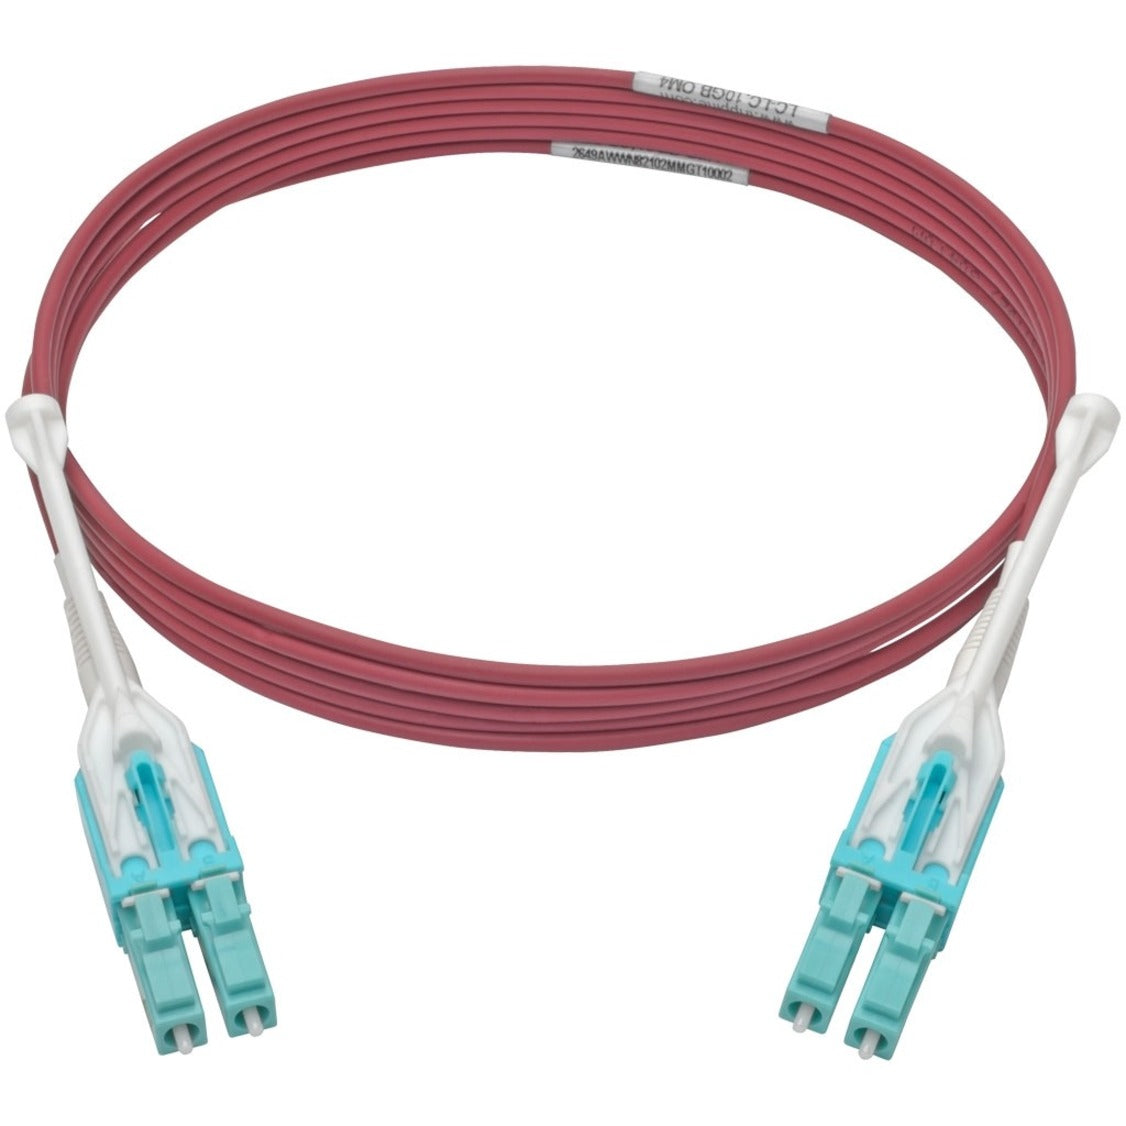 Tripp Lite N821-02M-MG-T Fiber Optic Network Cable, 6.60 ft, Multi-mode, 100 Gbit/s, Magenta